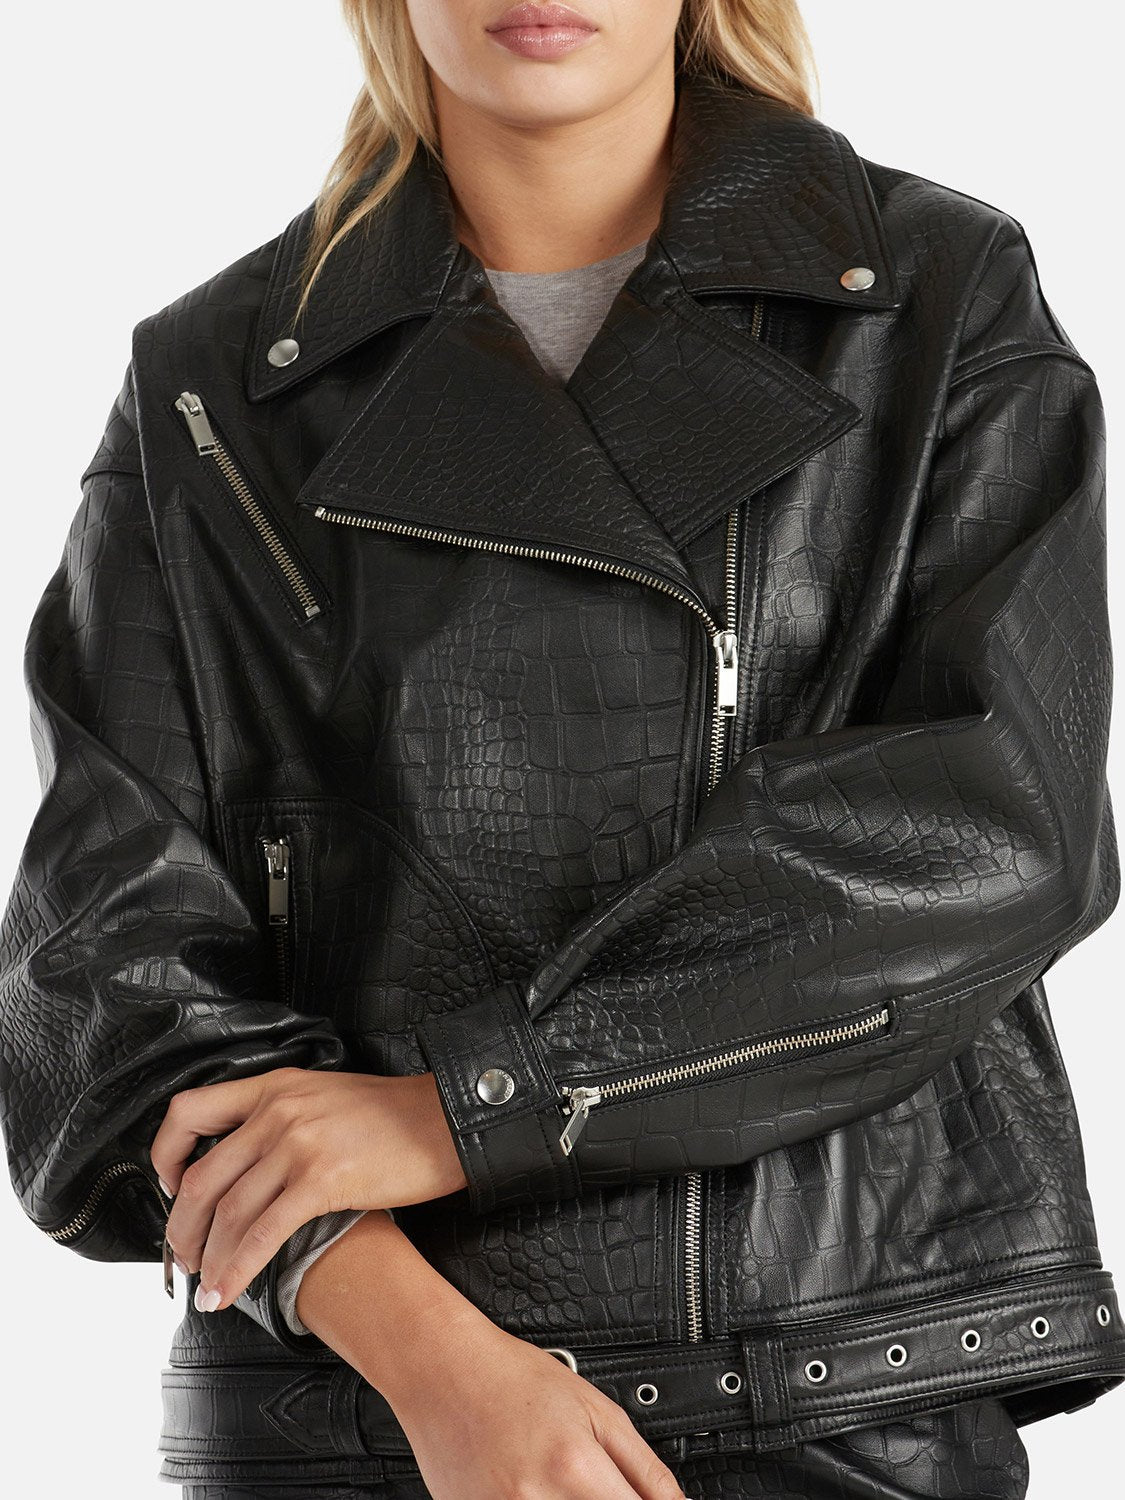 Eden Textured Leather Jacket